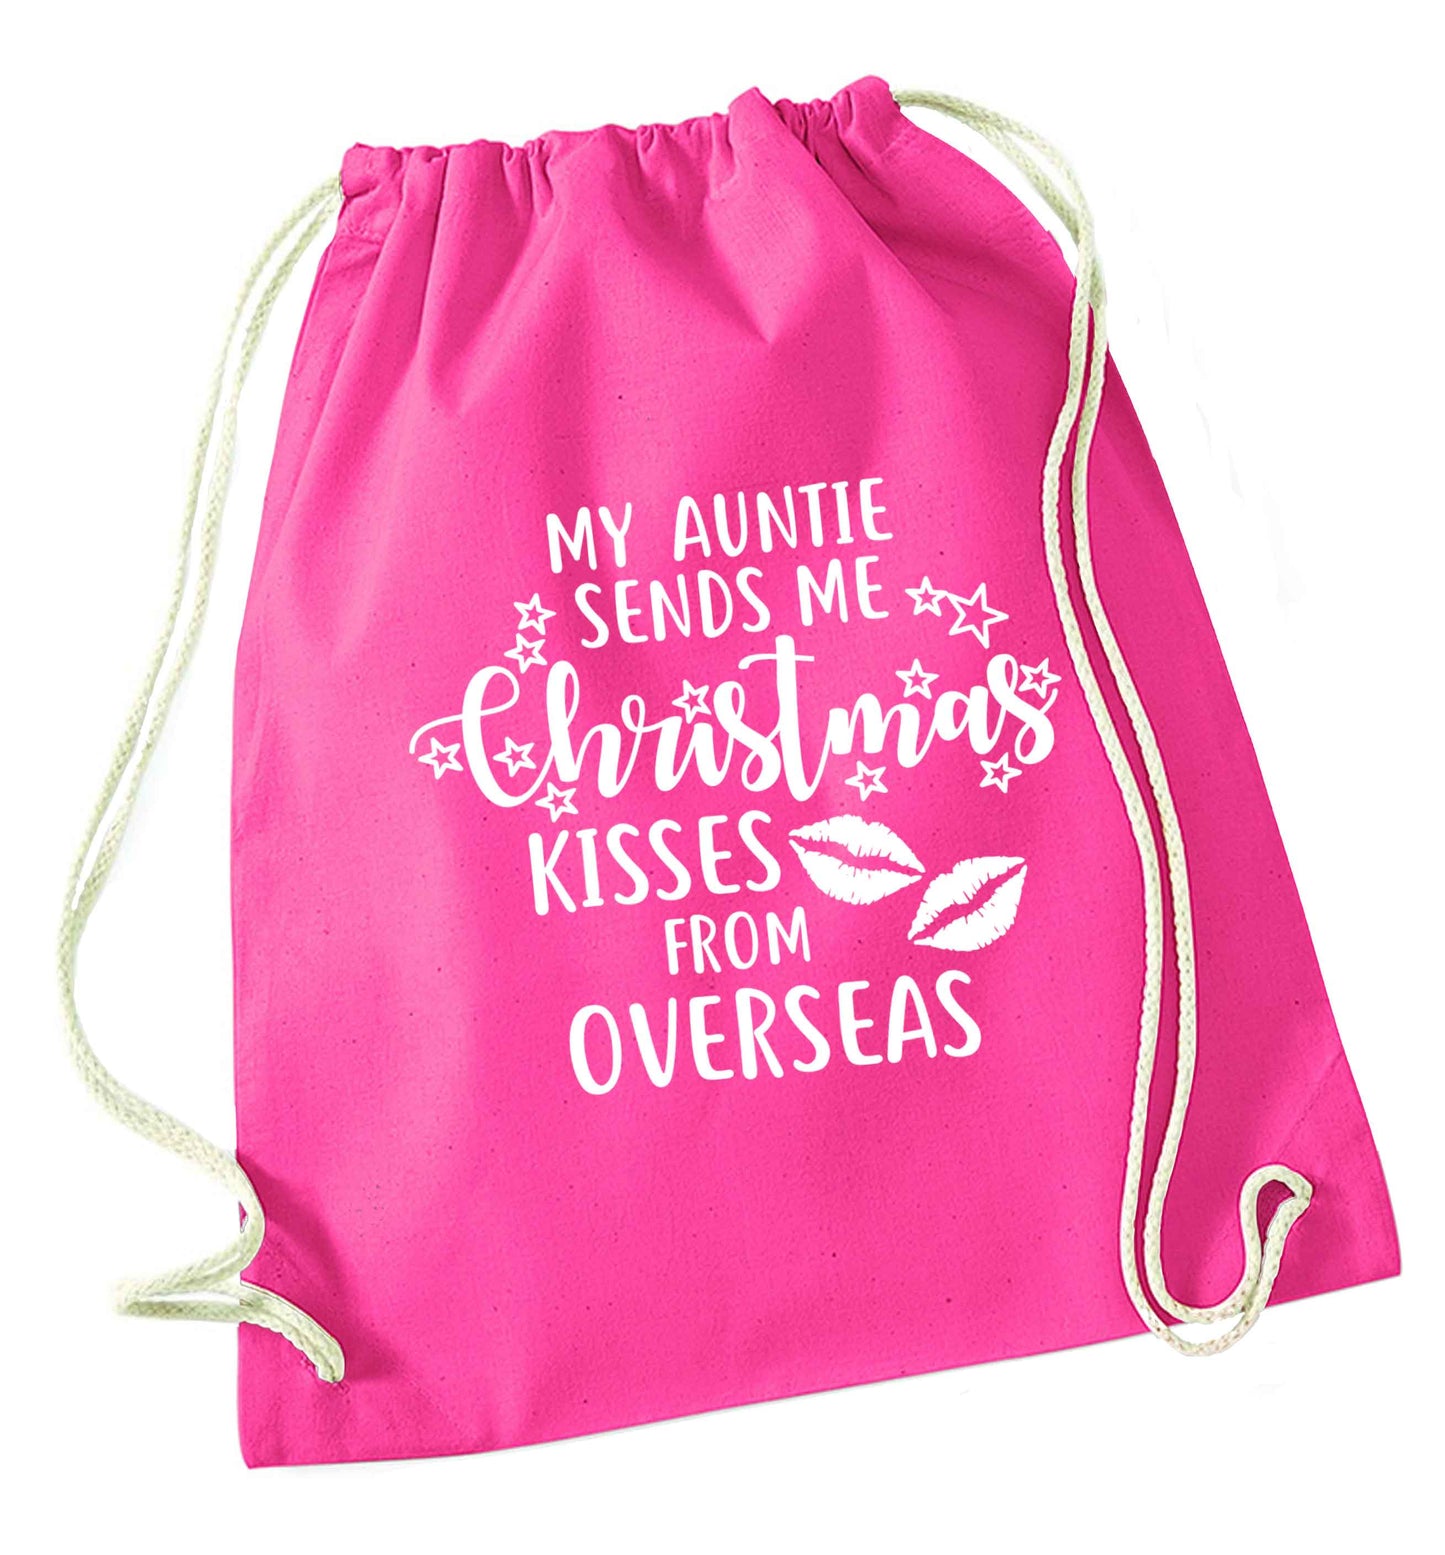 Auntie Christmas Kisses Overseas pink drawstring bag